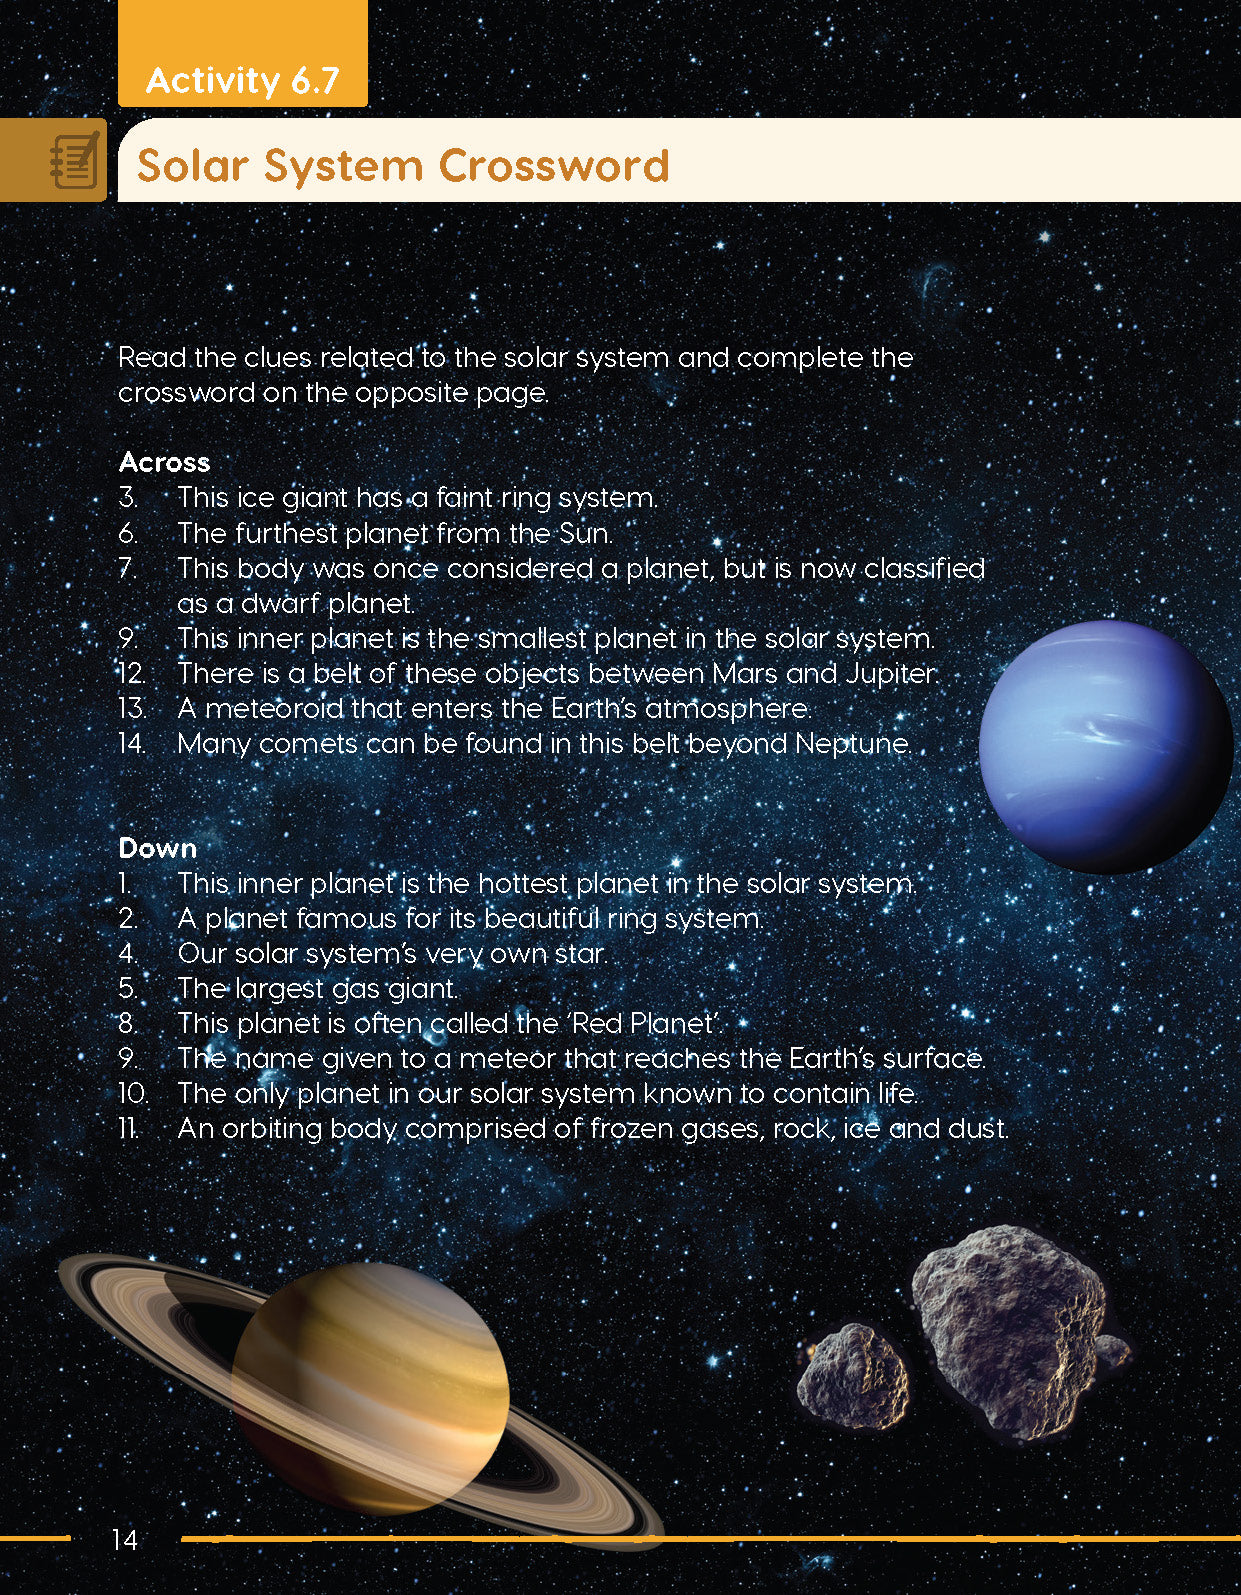 Next Generation Science Activity Book – Grade 6, Book B